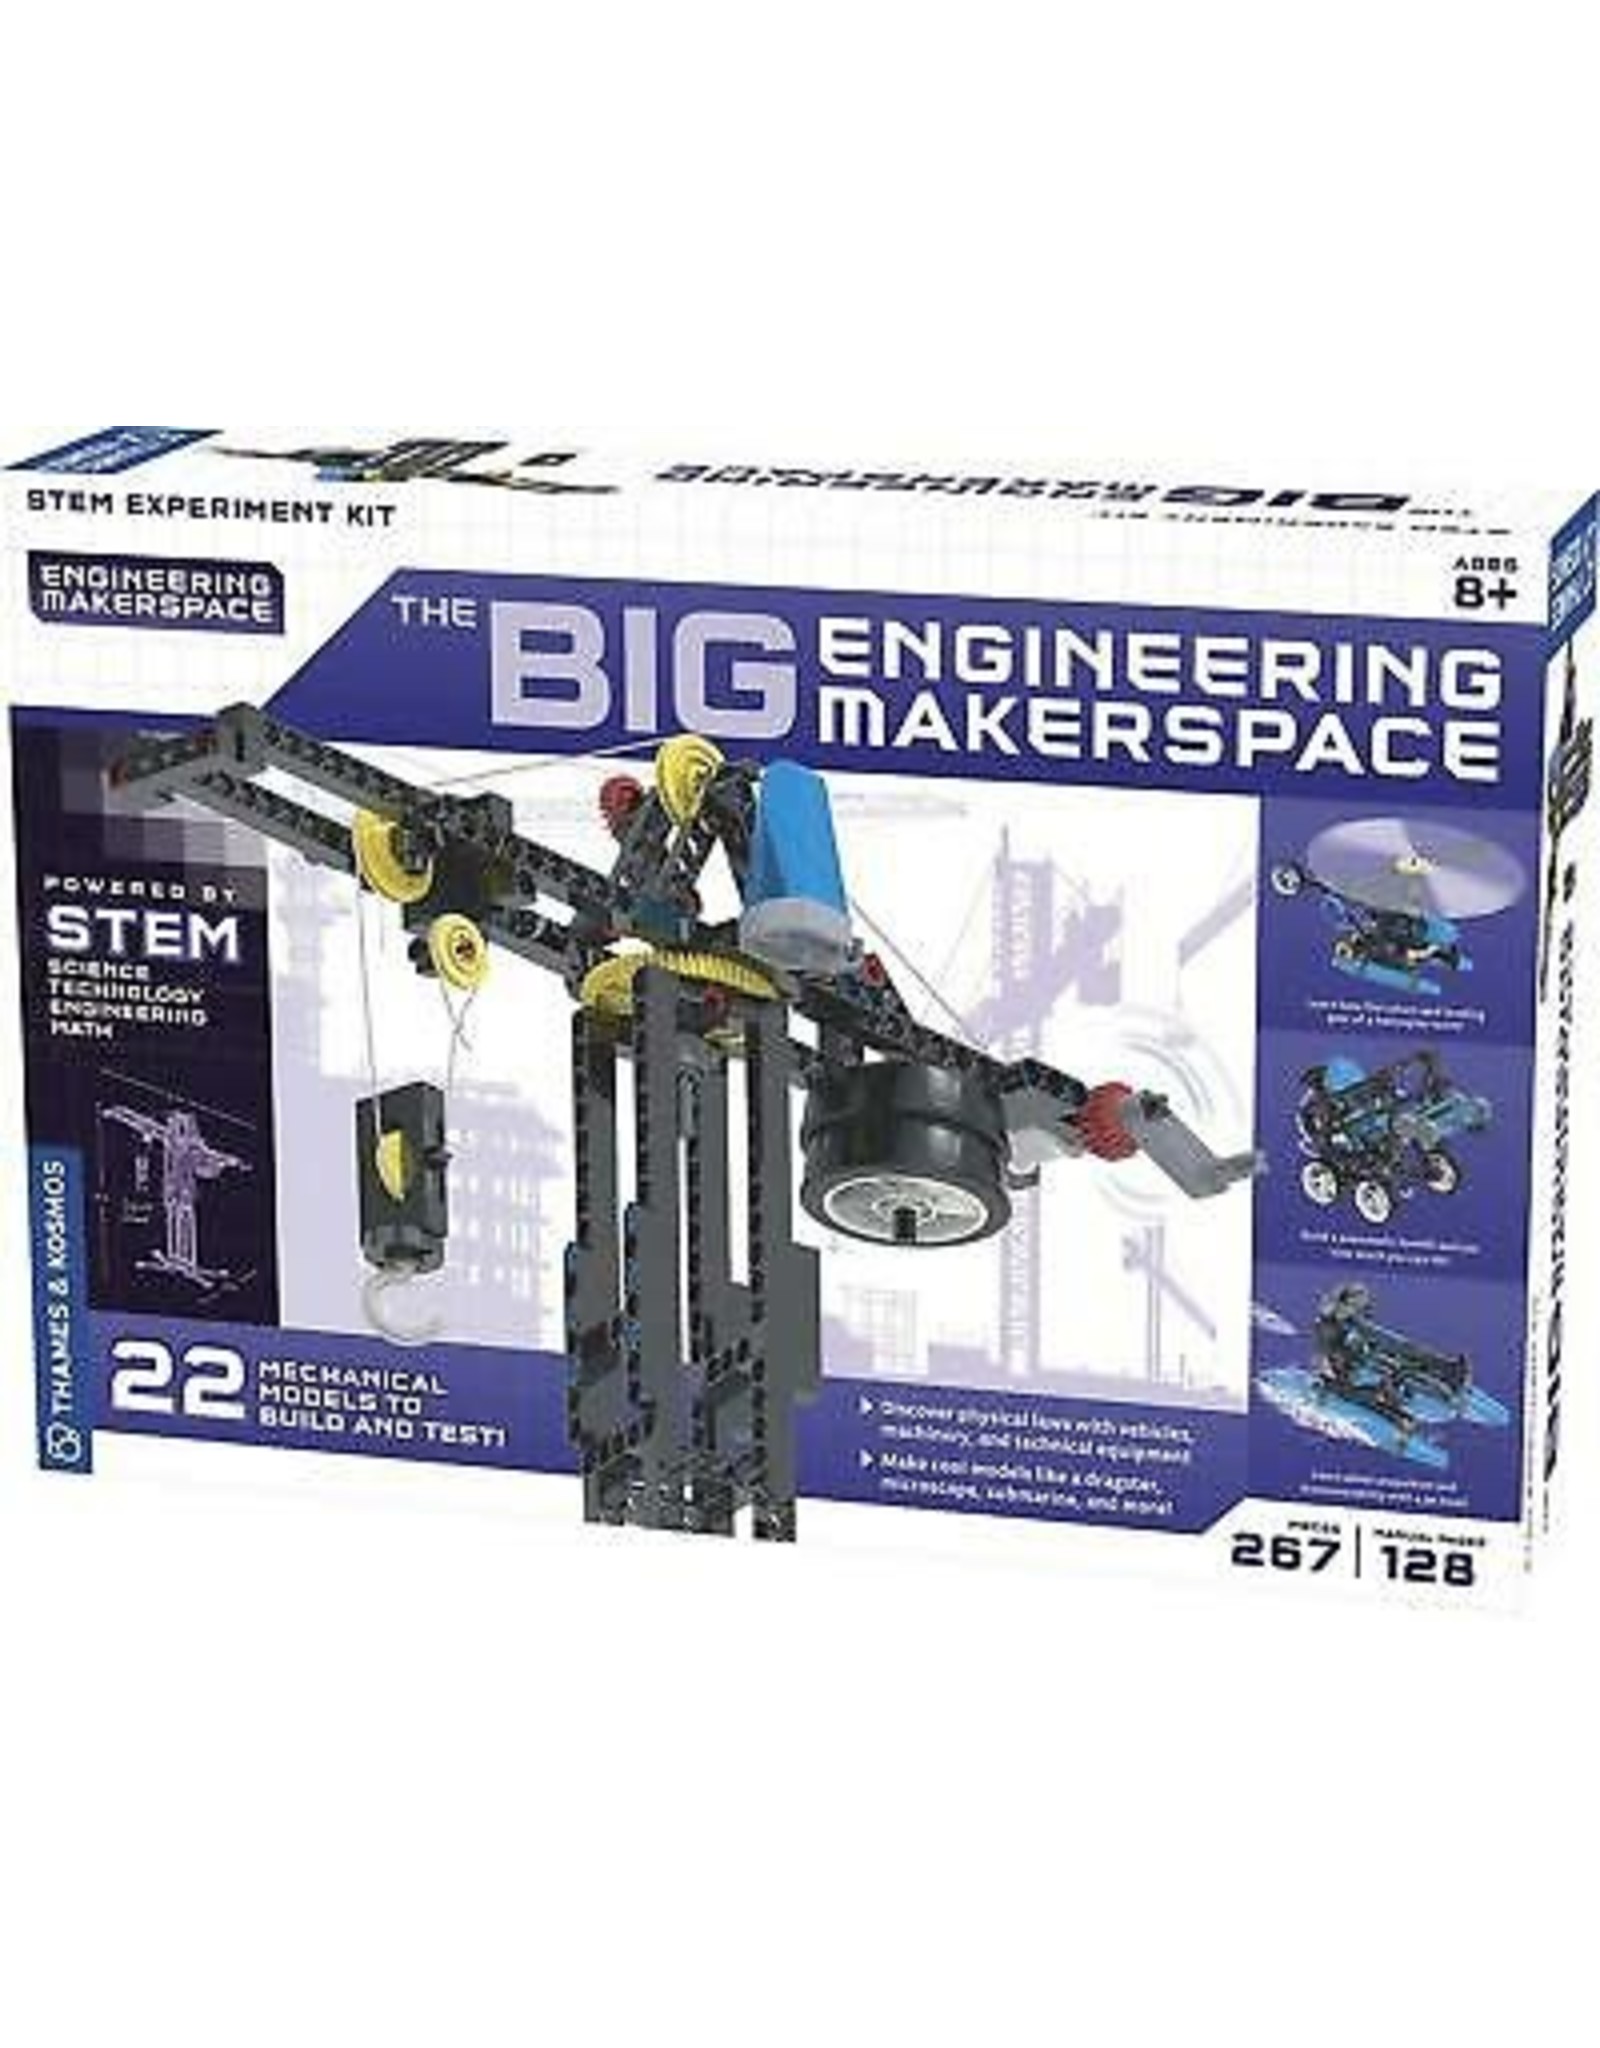 The Big Engineering Makerspace